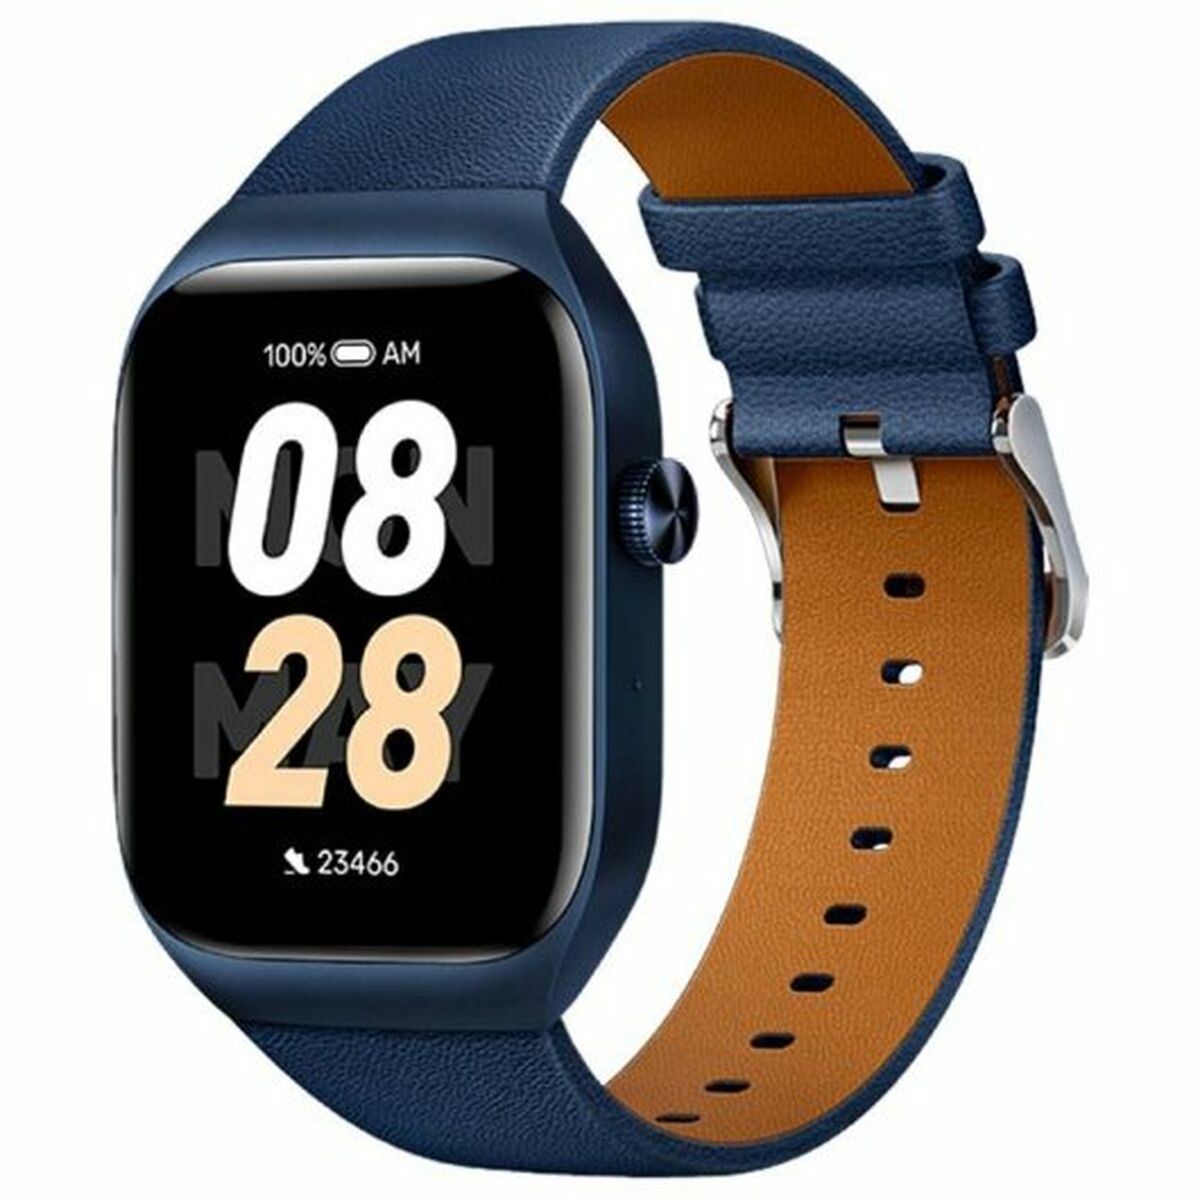 Kaufe Smartwatch Mibro T2 Blau bei AWK Flagship um € 95.00